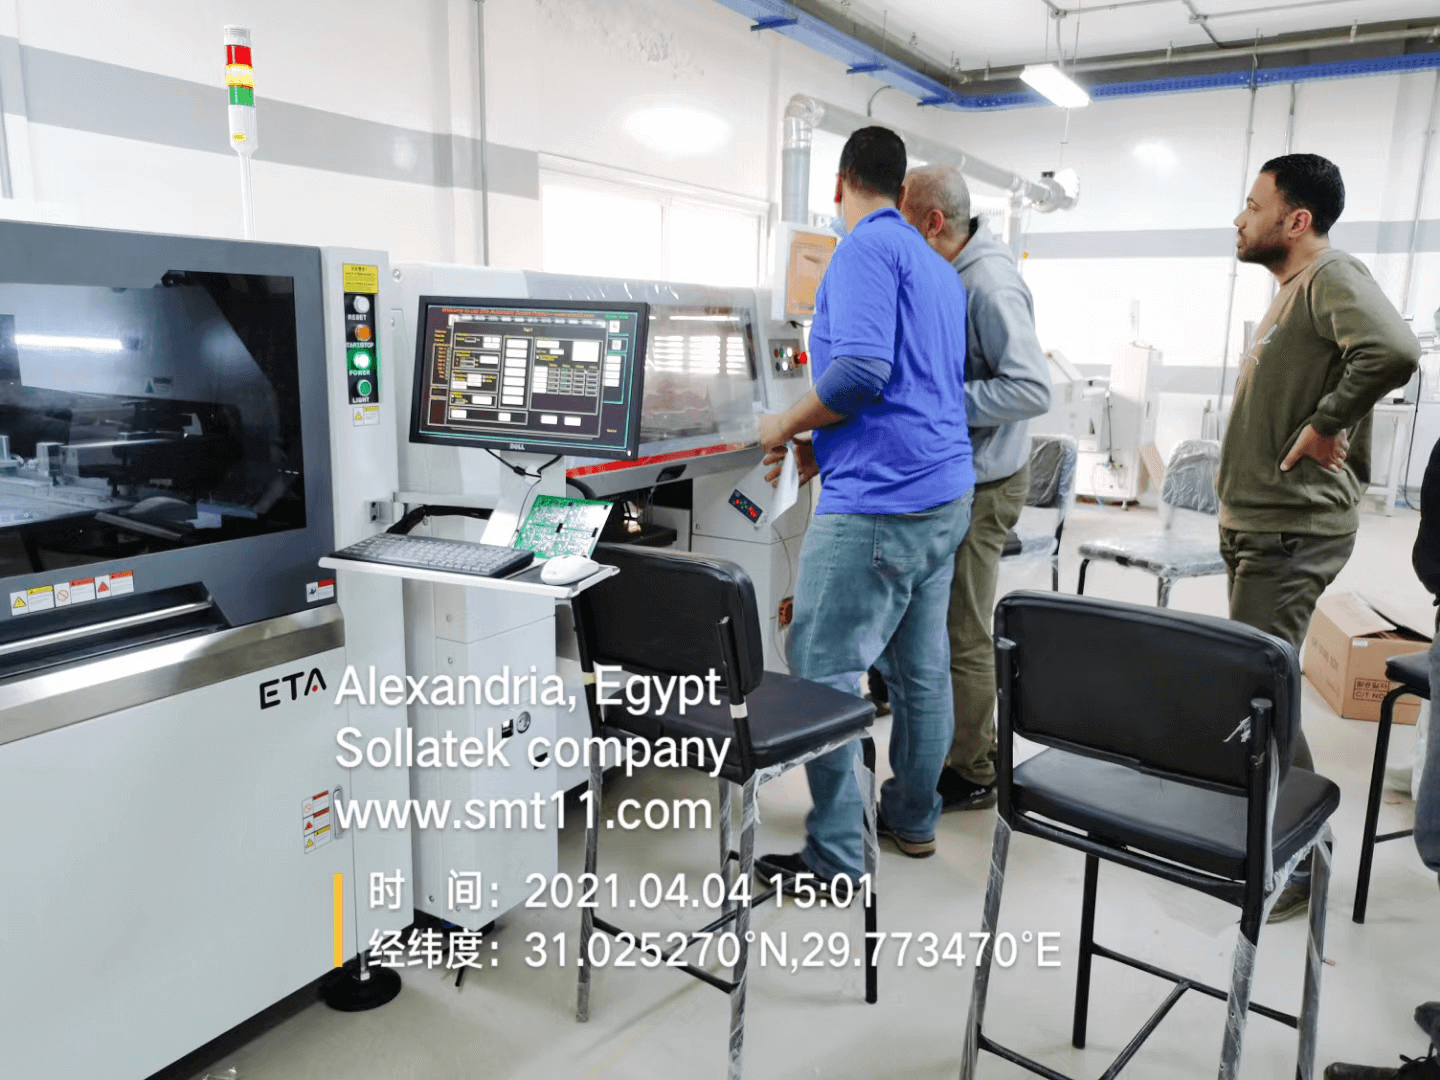 4 ETA Global Service i Egypten